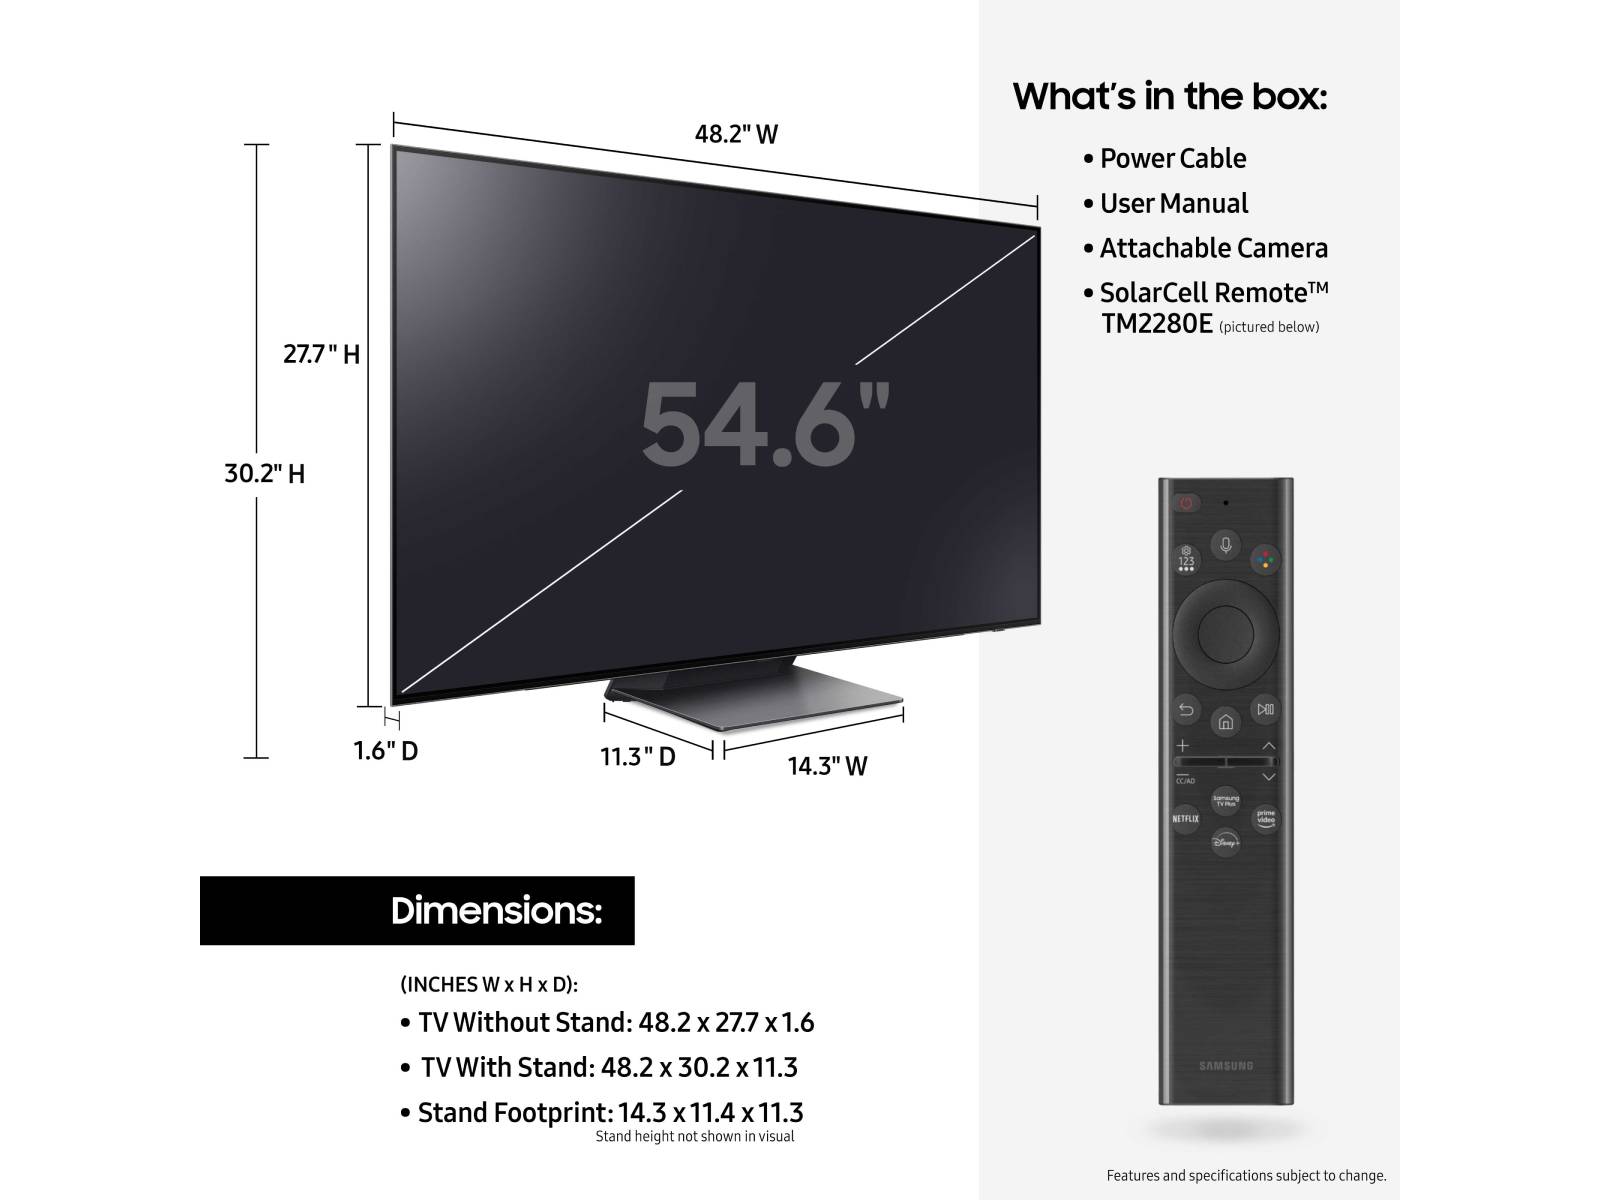 Samsung Pantalla 55 NEO QLED 8K UHD Smart TV